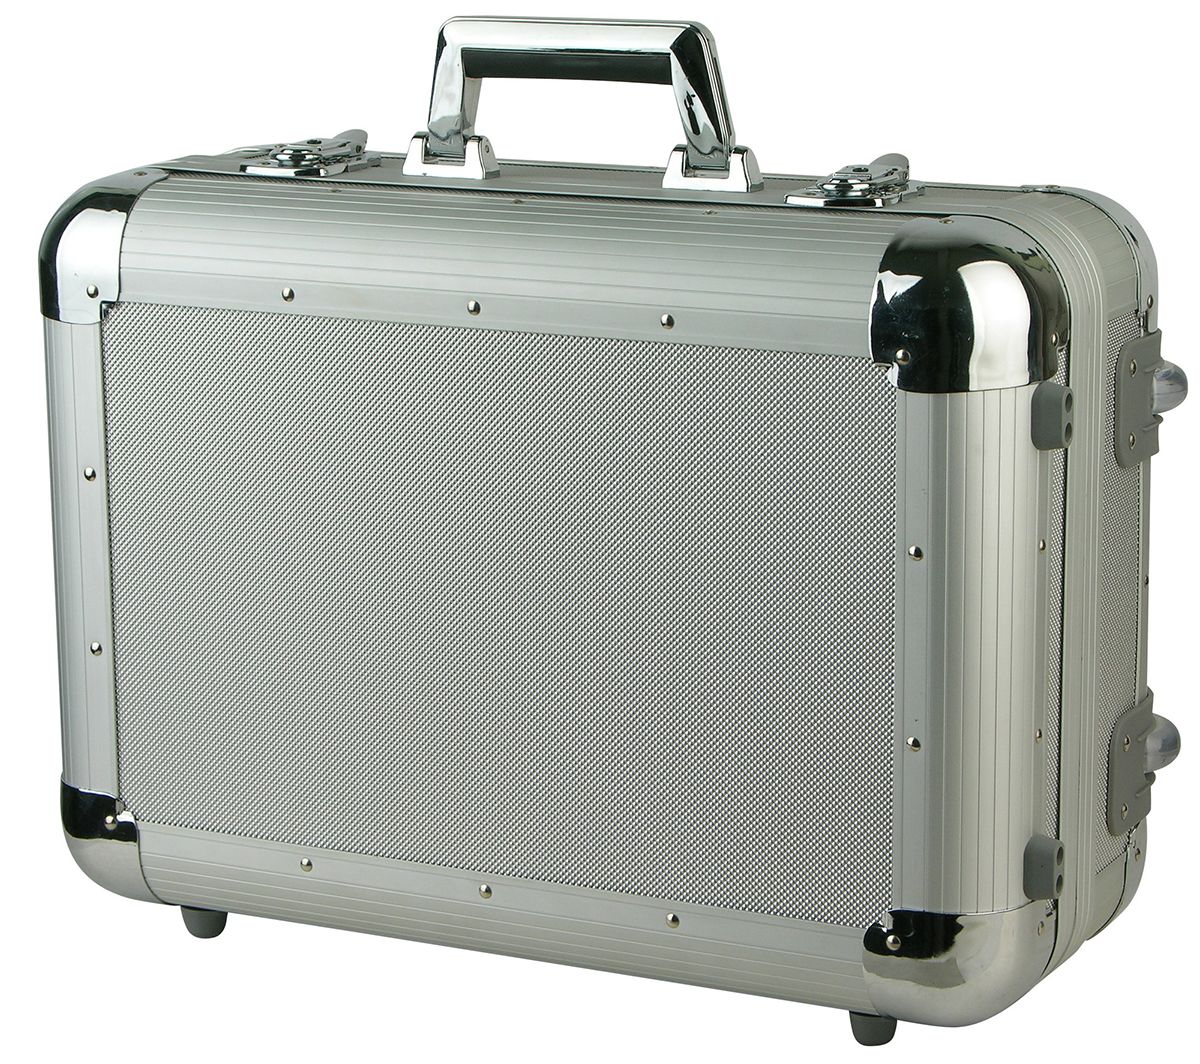 Viso STC Waterproof Metal Equipment case With Wheels, 482 x 340 x 205mm